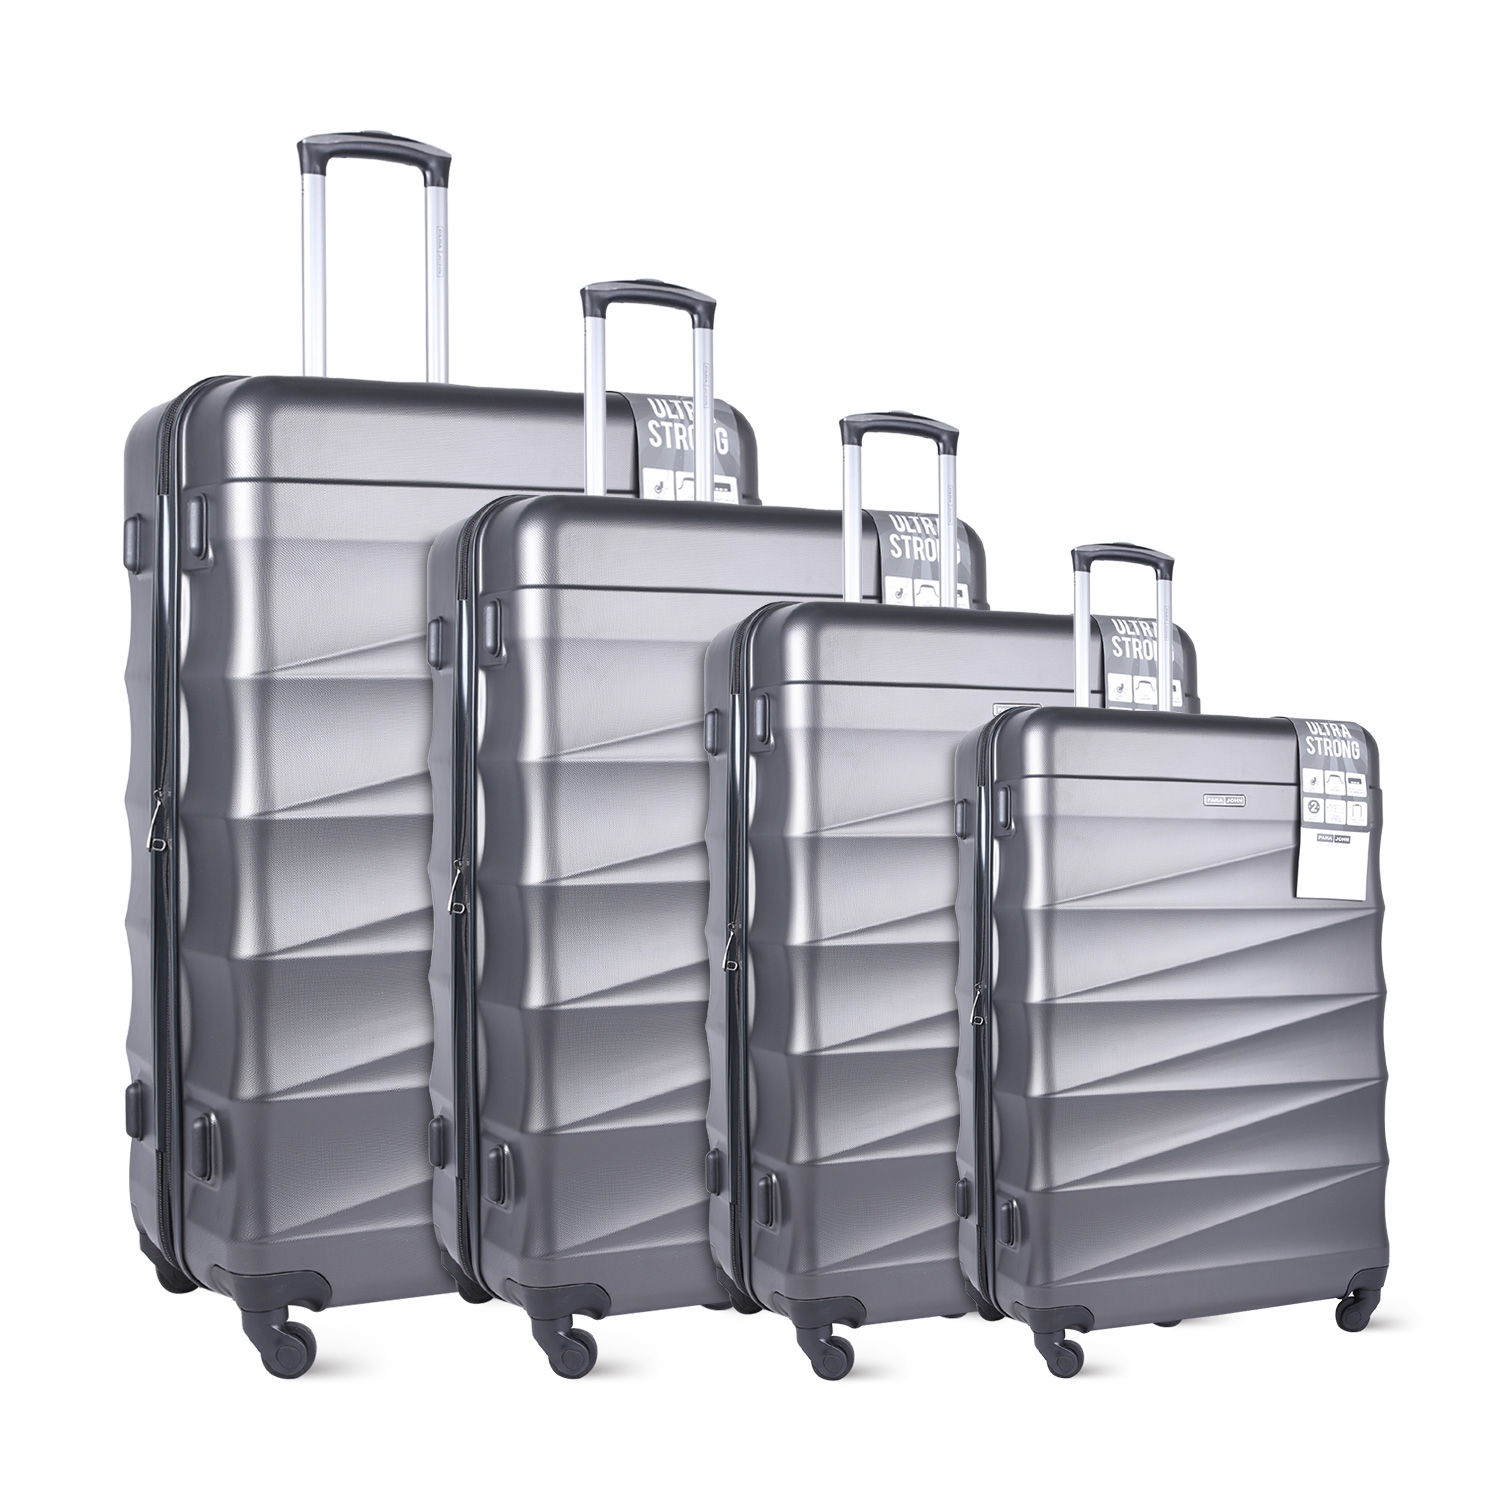 طقم حقائب سفر 4 حقائب (20 ، 24 ، 28 ، 32) بوصة مادة PVC أسود PARA JOHN - Travel Luggage Suitcase Set of 4 - Hard Shell Luggage Spinner - (20 ، 24 ، 28 ، 32) inch